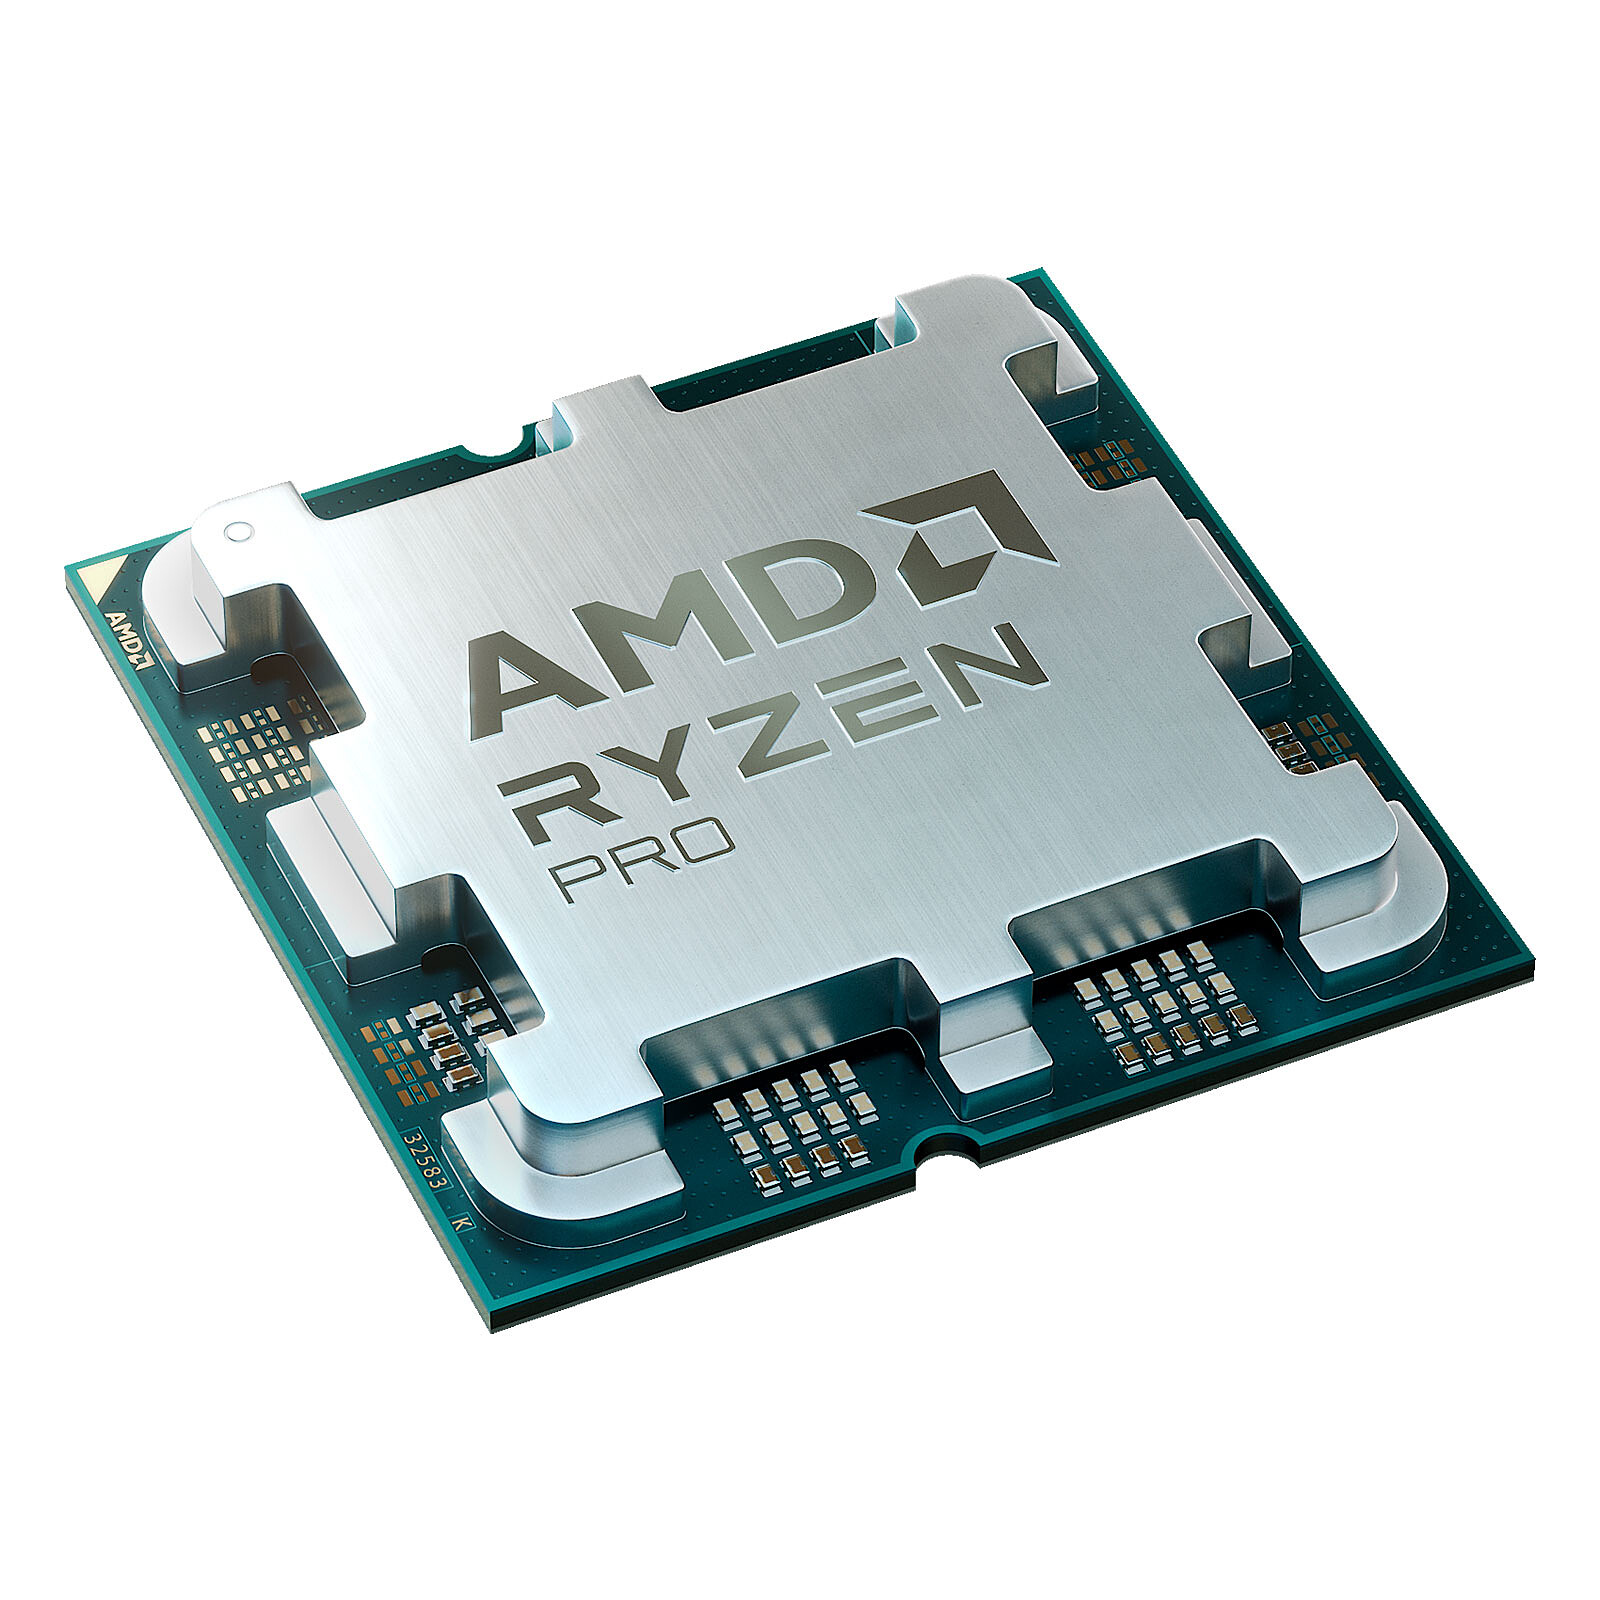 AMD Ryzen 7 5800X (3.8 GHz / 4.7 GHz) - Processeur - LDLC